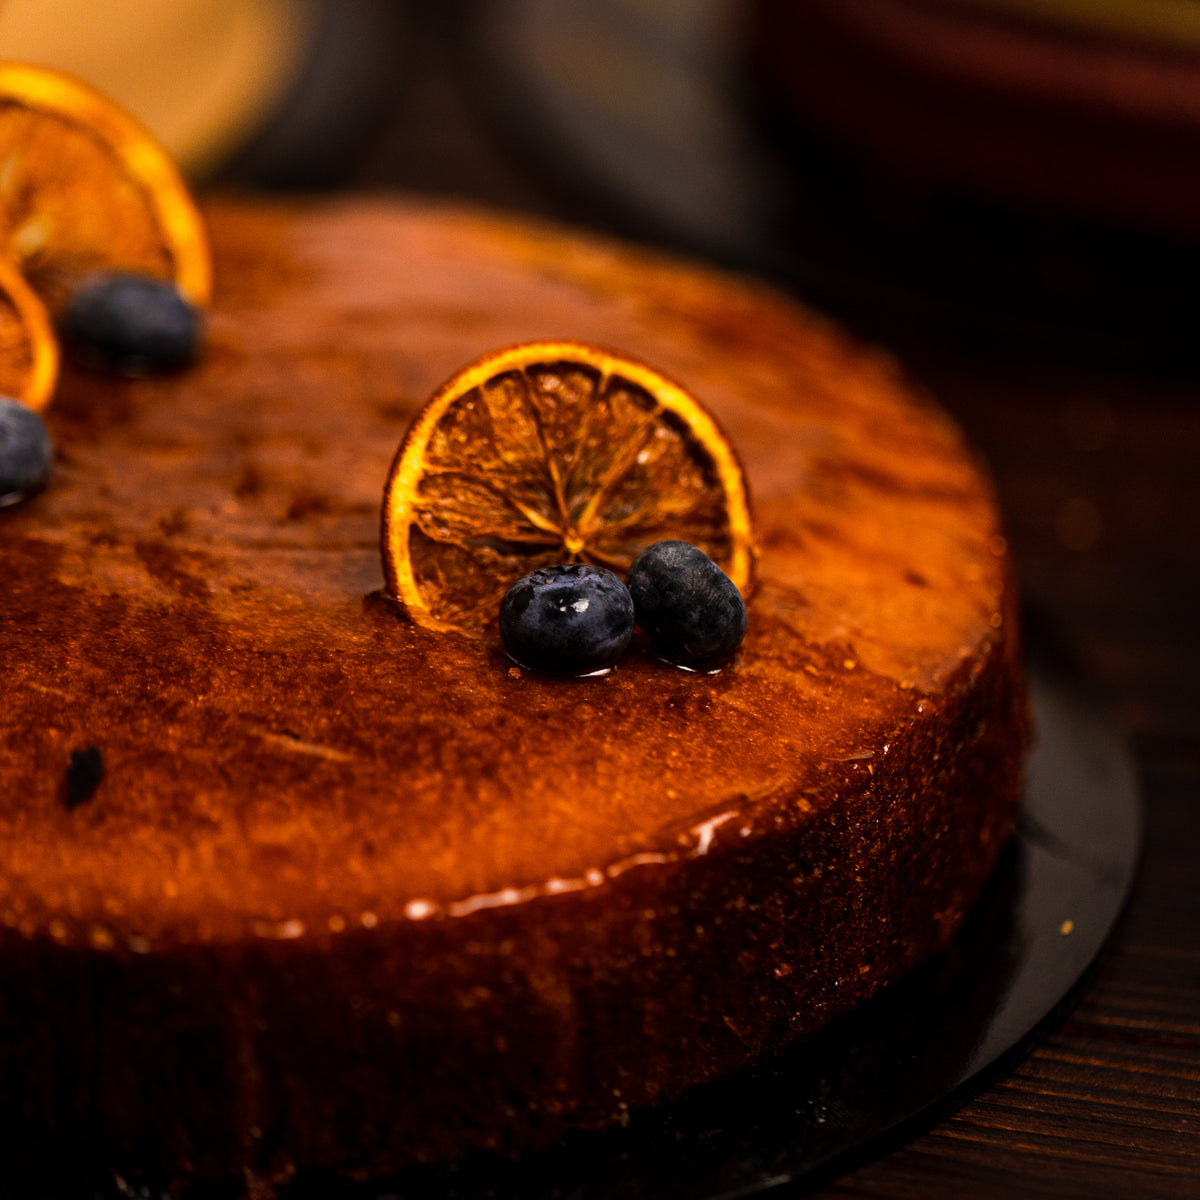 Orange Polenta Cake